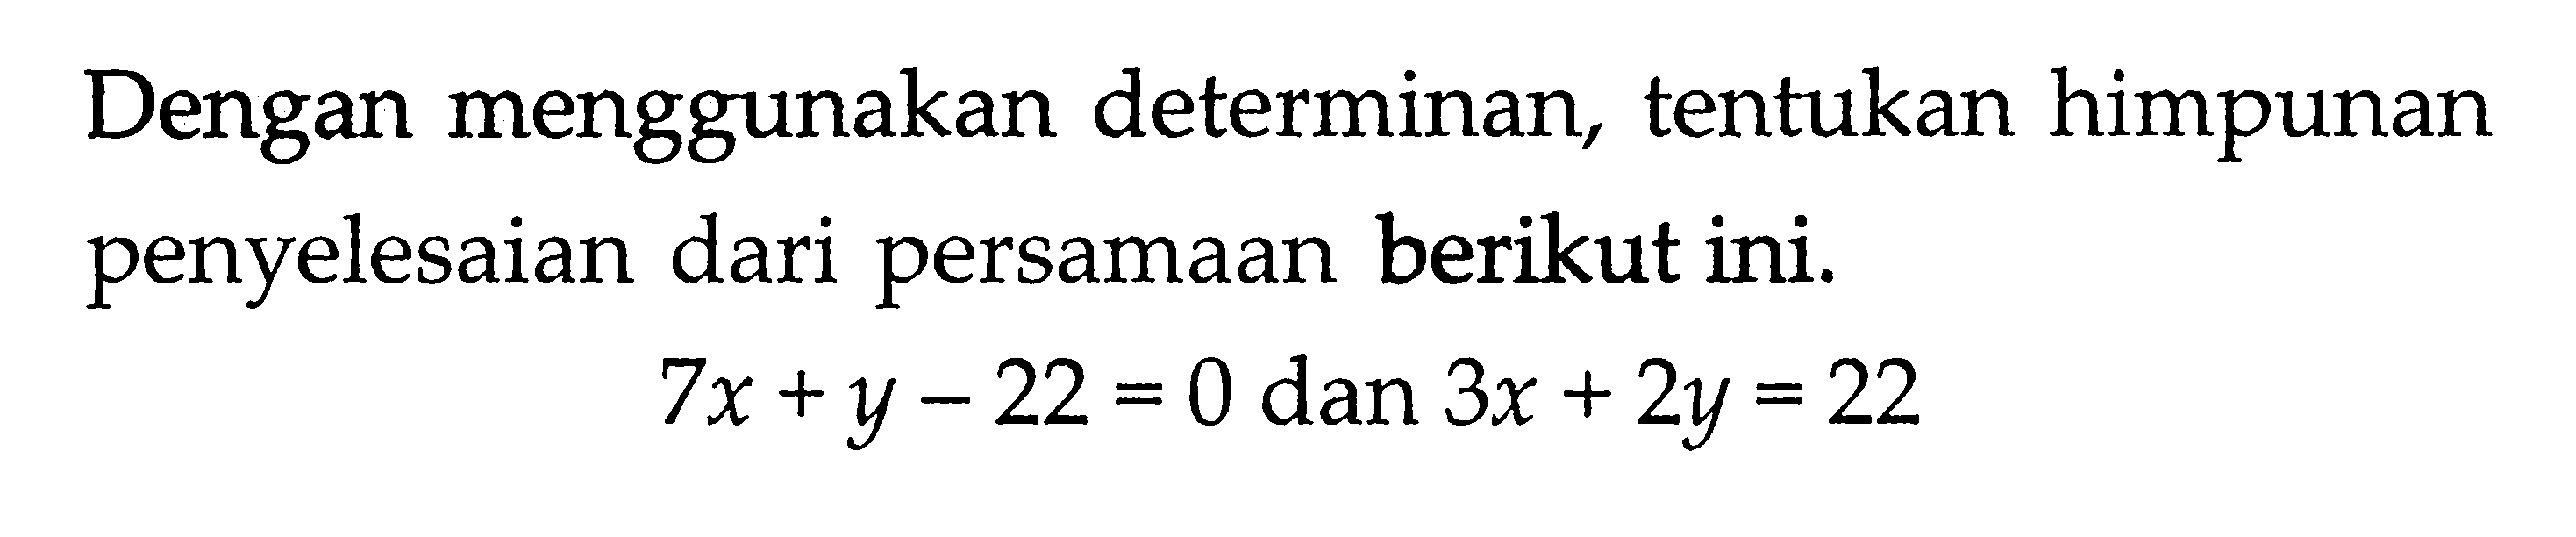 Dengan menggunakan determinan, tentukan himpunan penyelesaian dari persamaan berikut ini. 7x + y - 22 = 0 dan 3x + 2y = 22